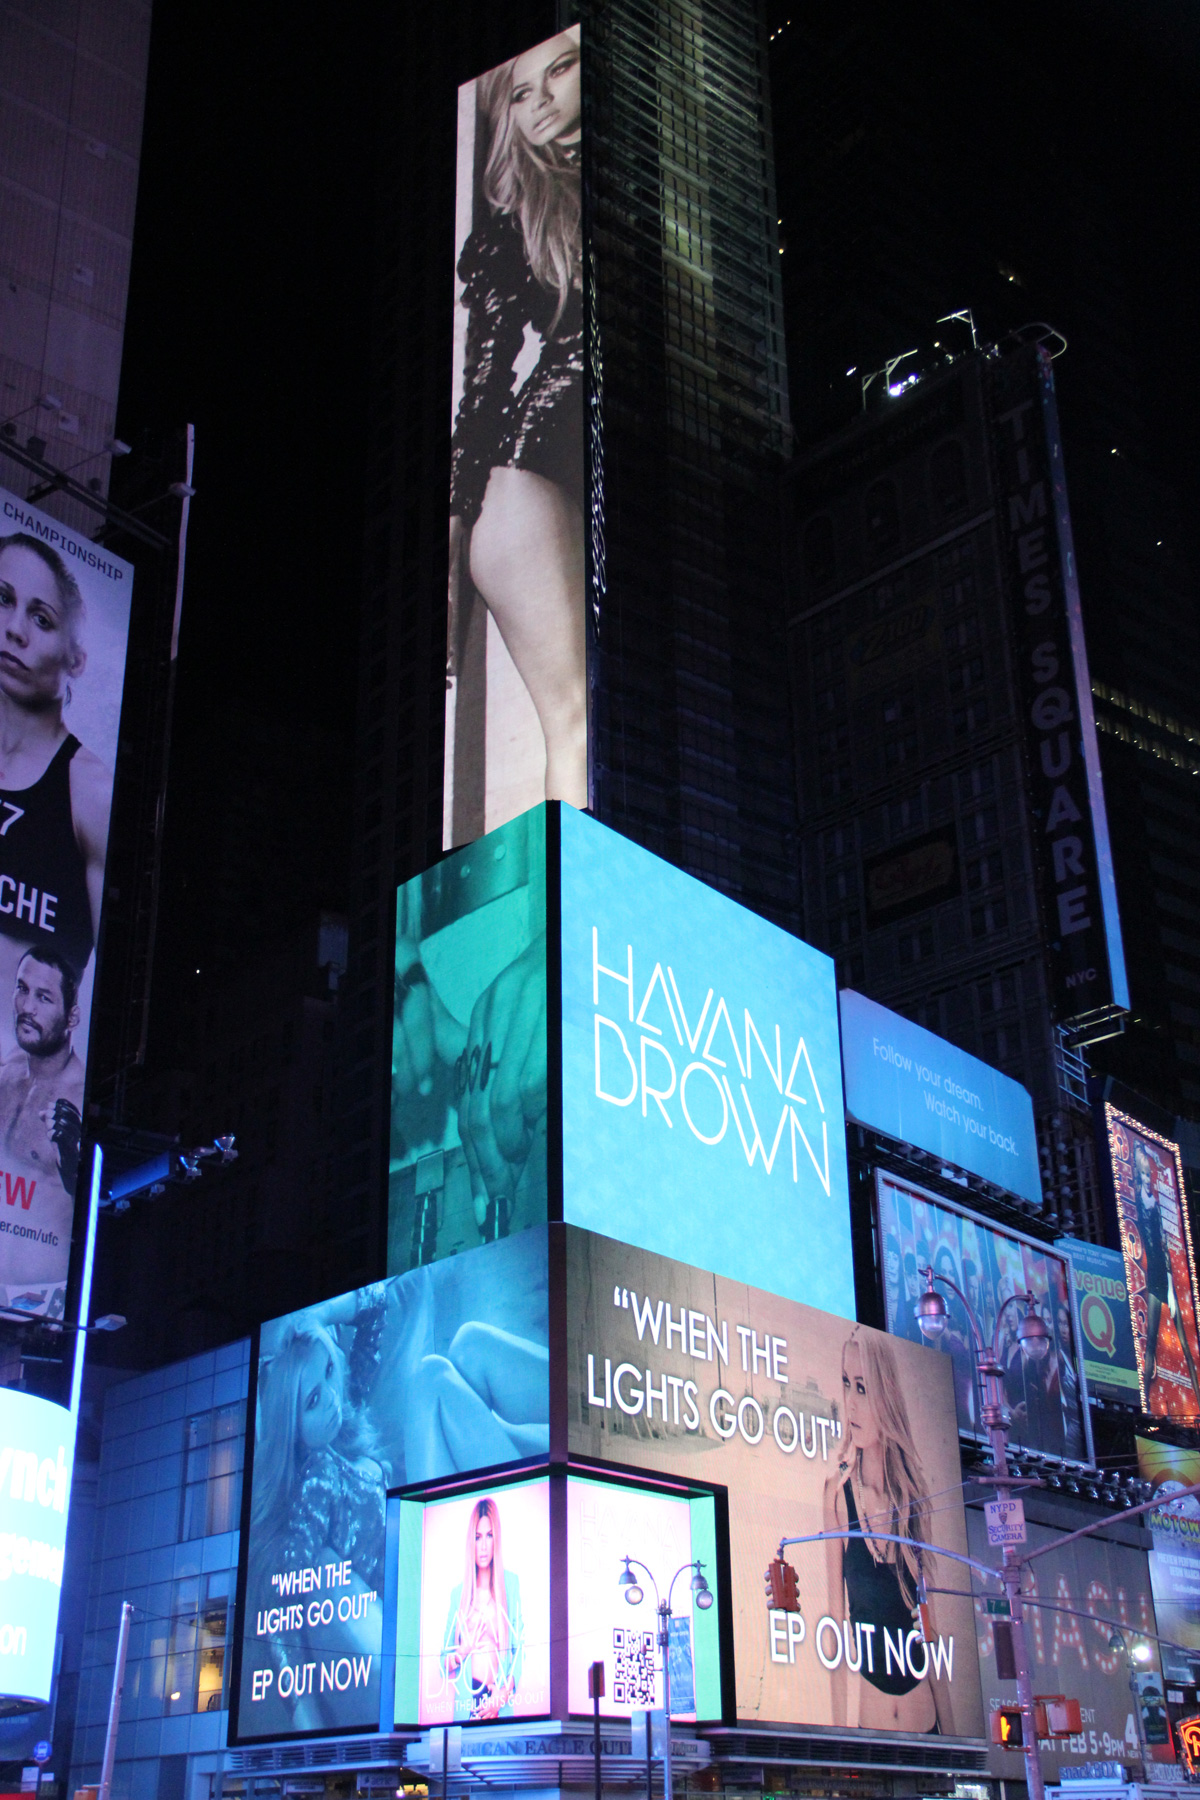 Havana Brown is on billboard in Times Square